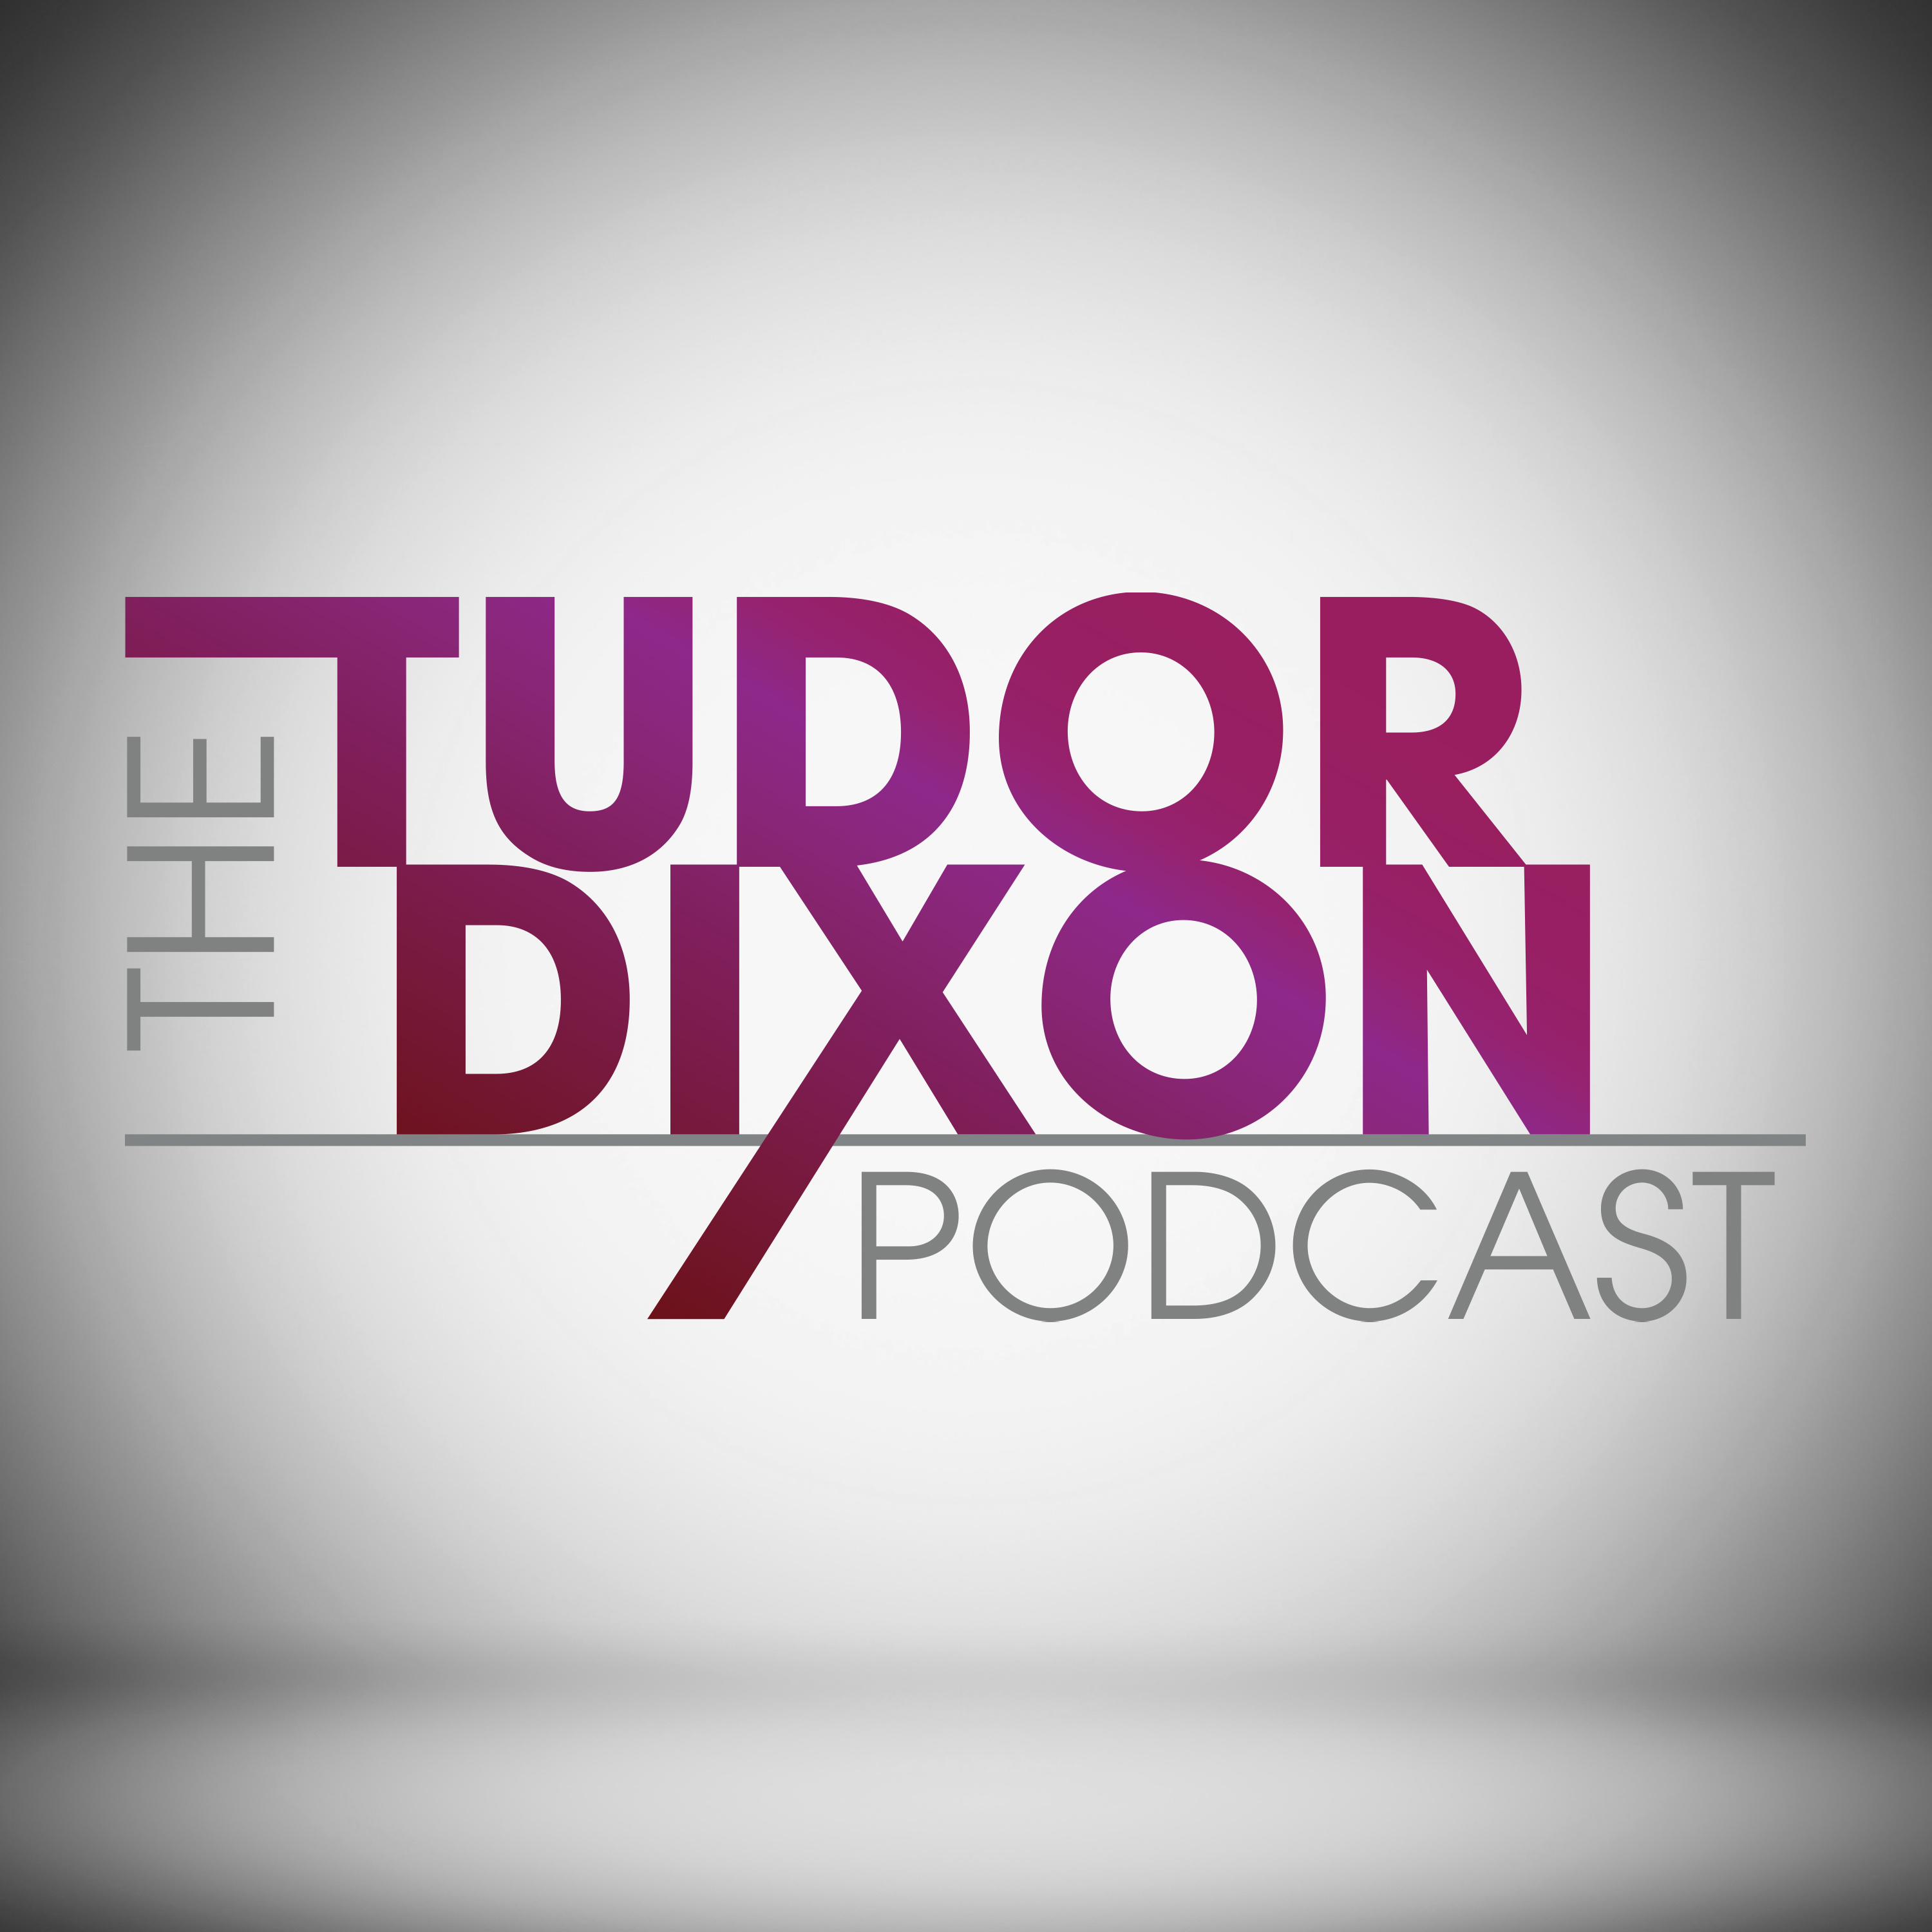 The Tudor Dixon Podcast: Navigating Faith in a Skeptical World